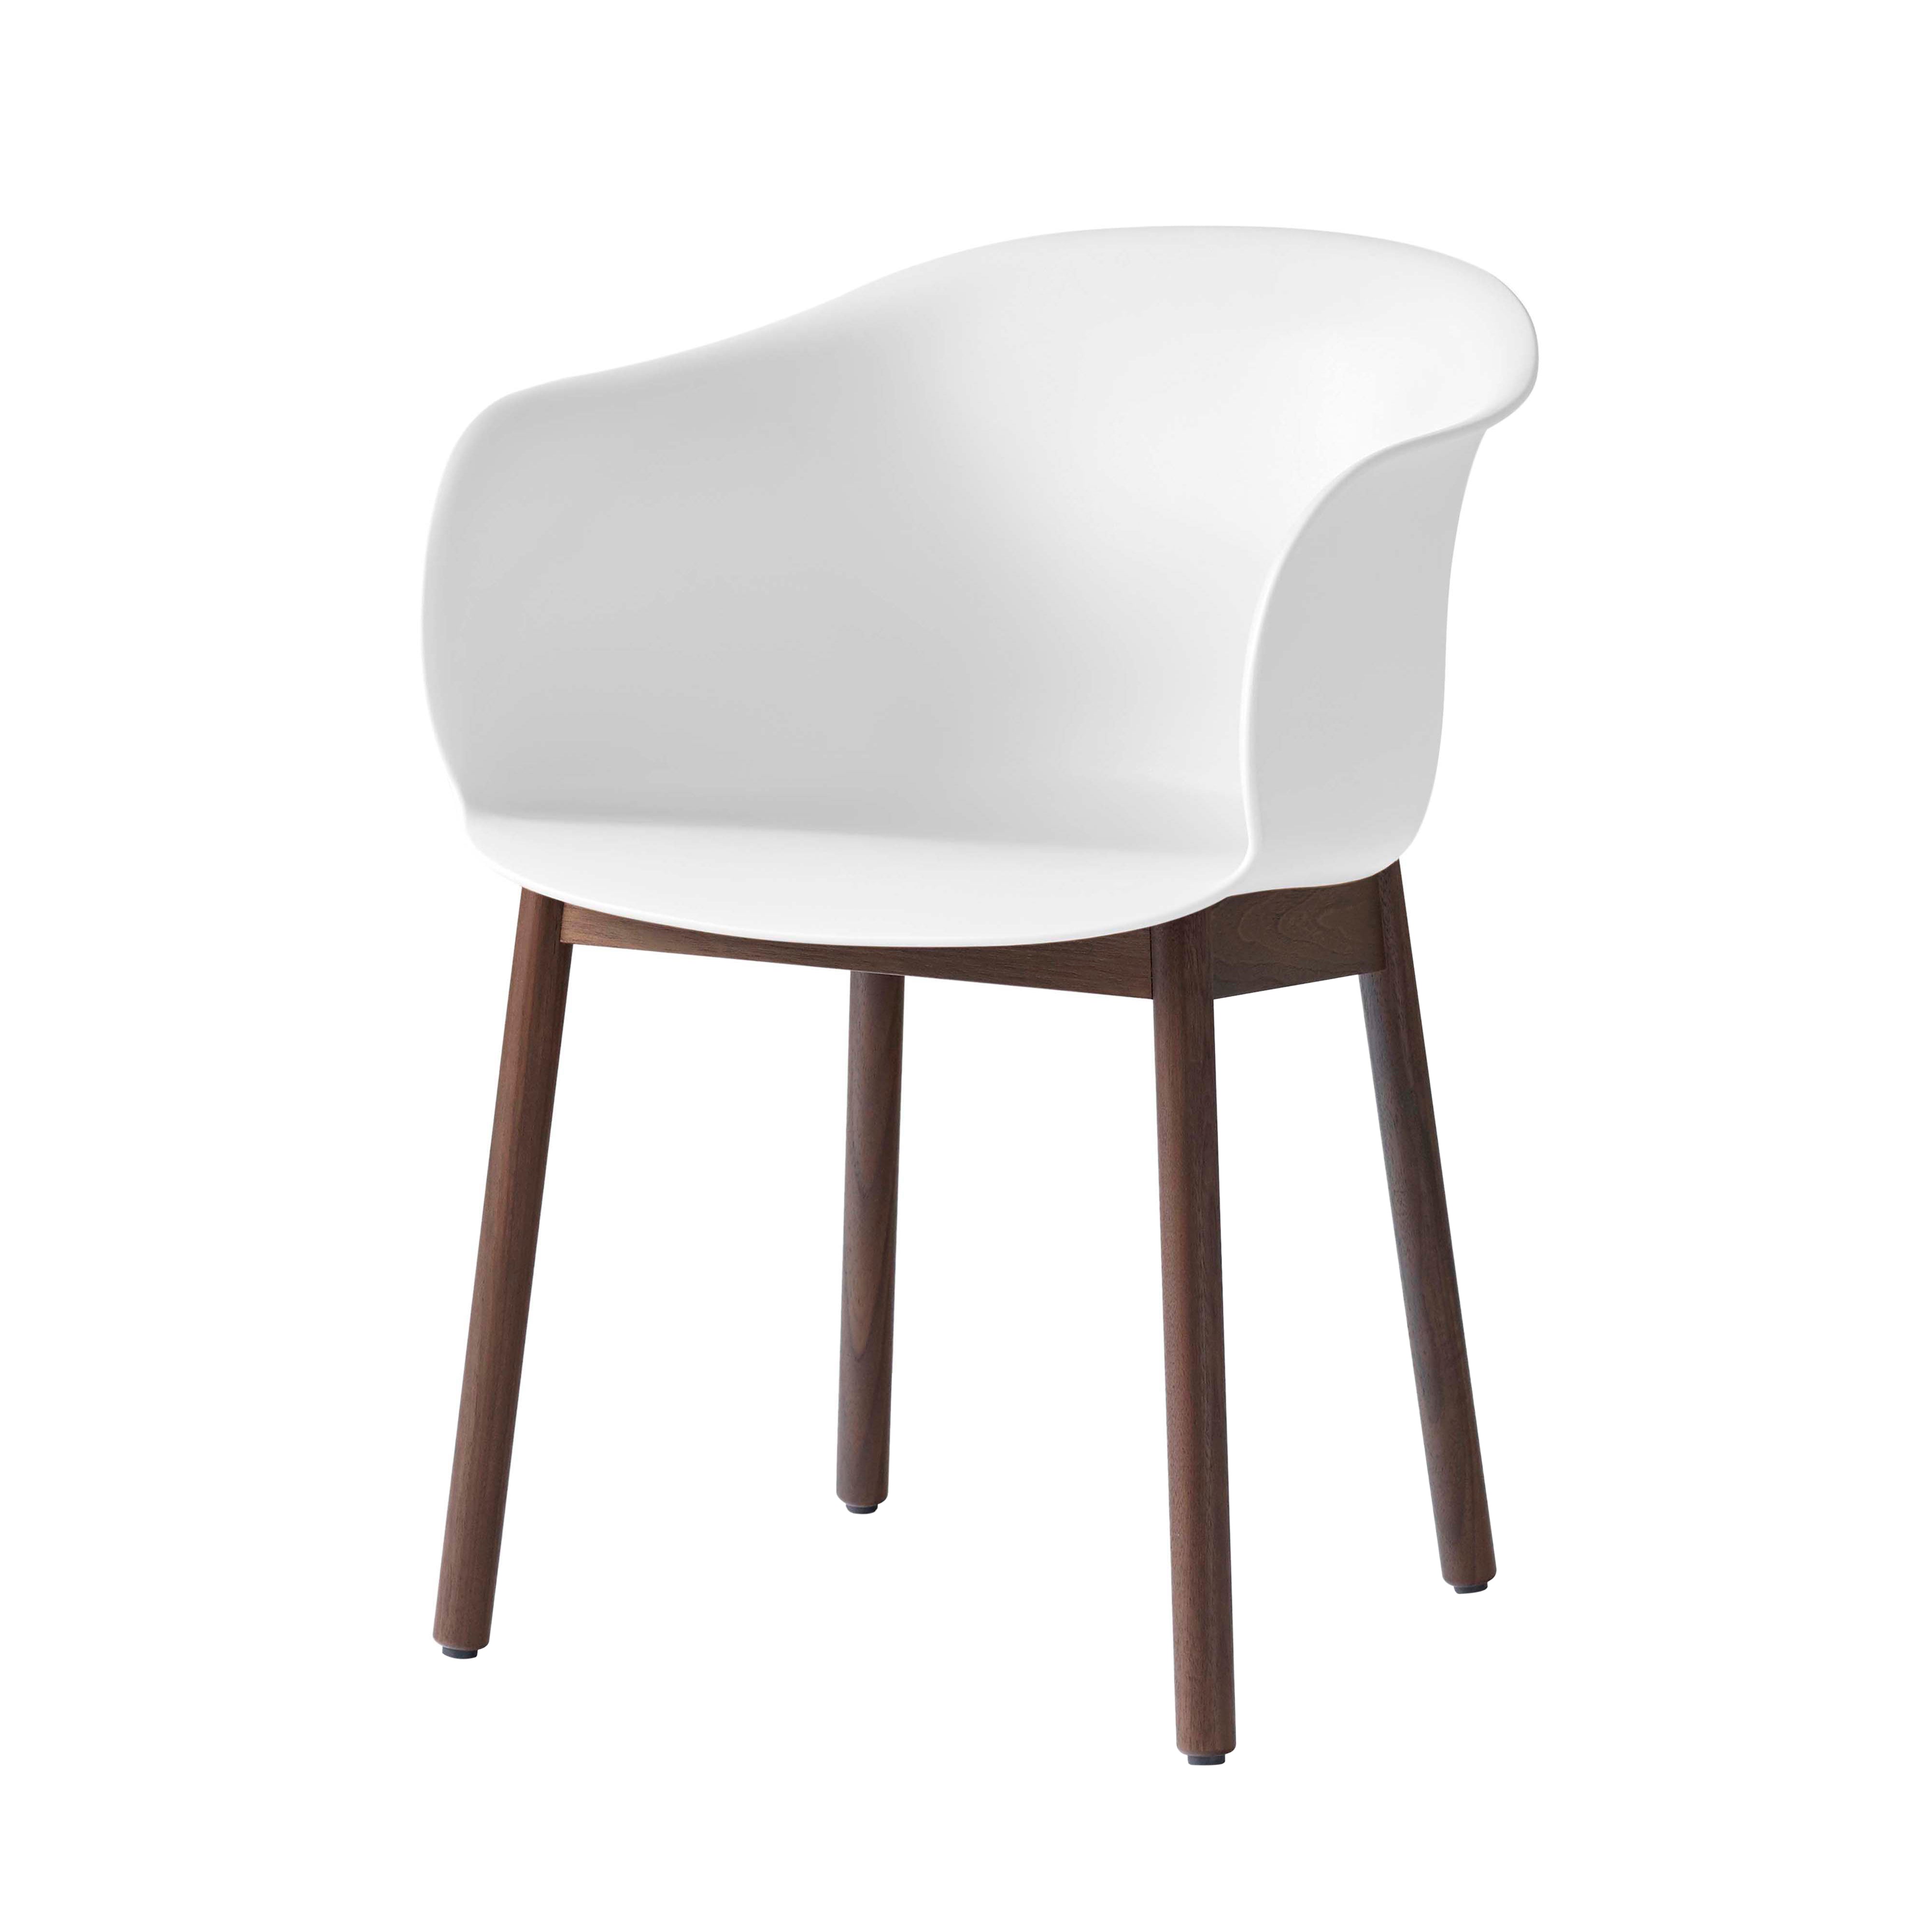 Elefy Chair JH30: Wood Base + White + Walnut